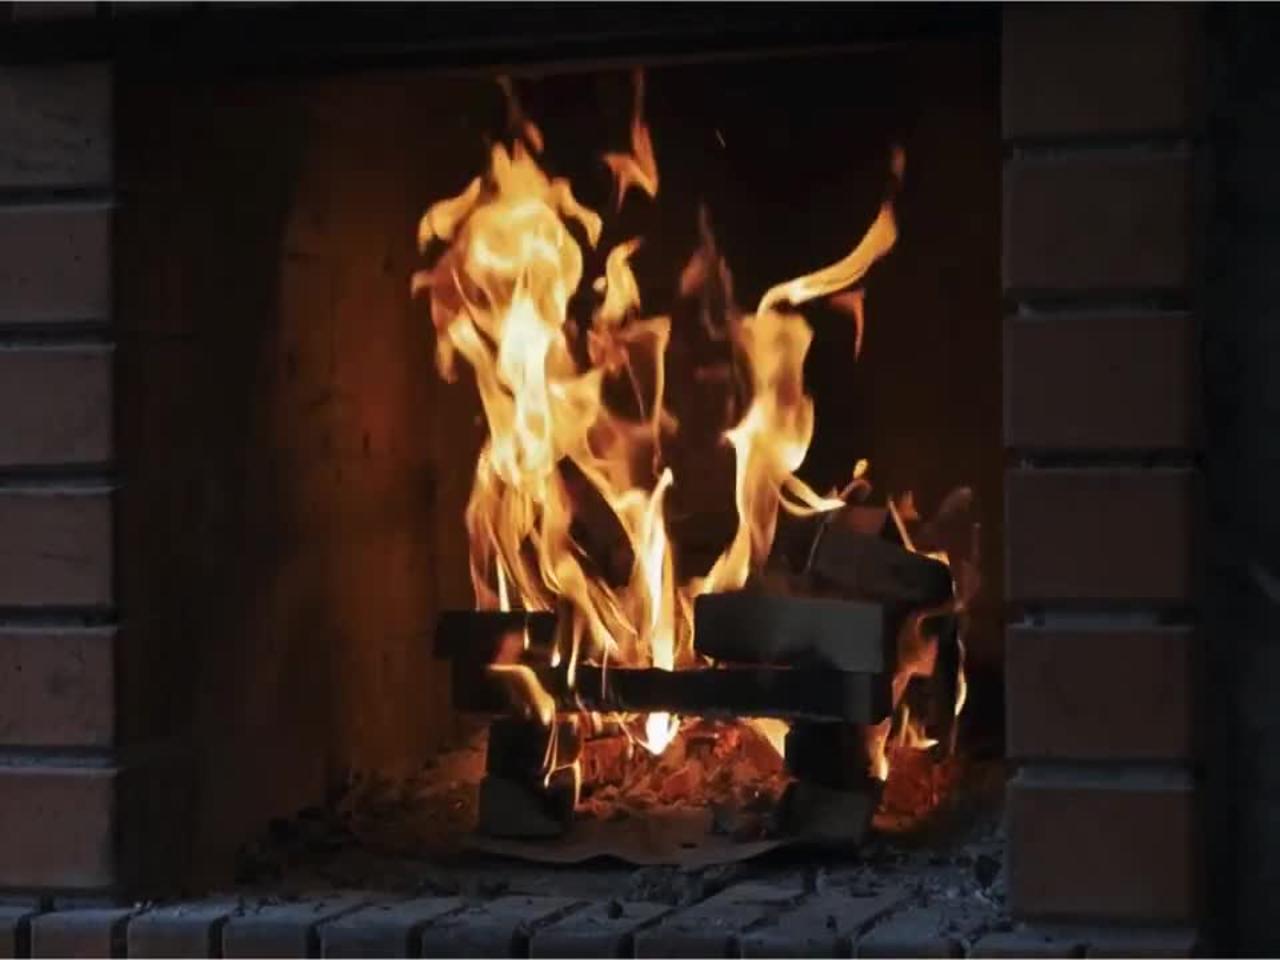 ✰ 10 min ✰ Best Fireplace HD 1080p video ✰ Relaxing fireplace sound ✰ Fireplace Burning ✰ Full HD